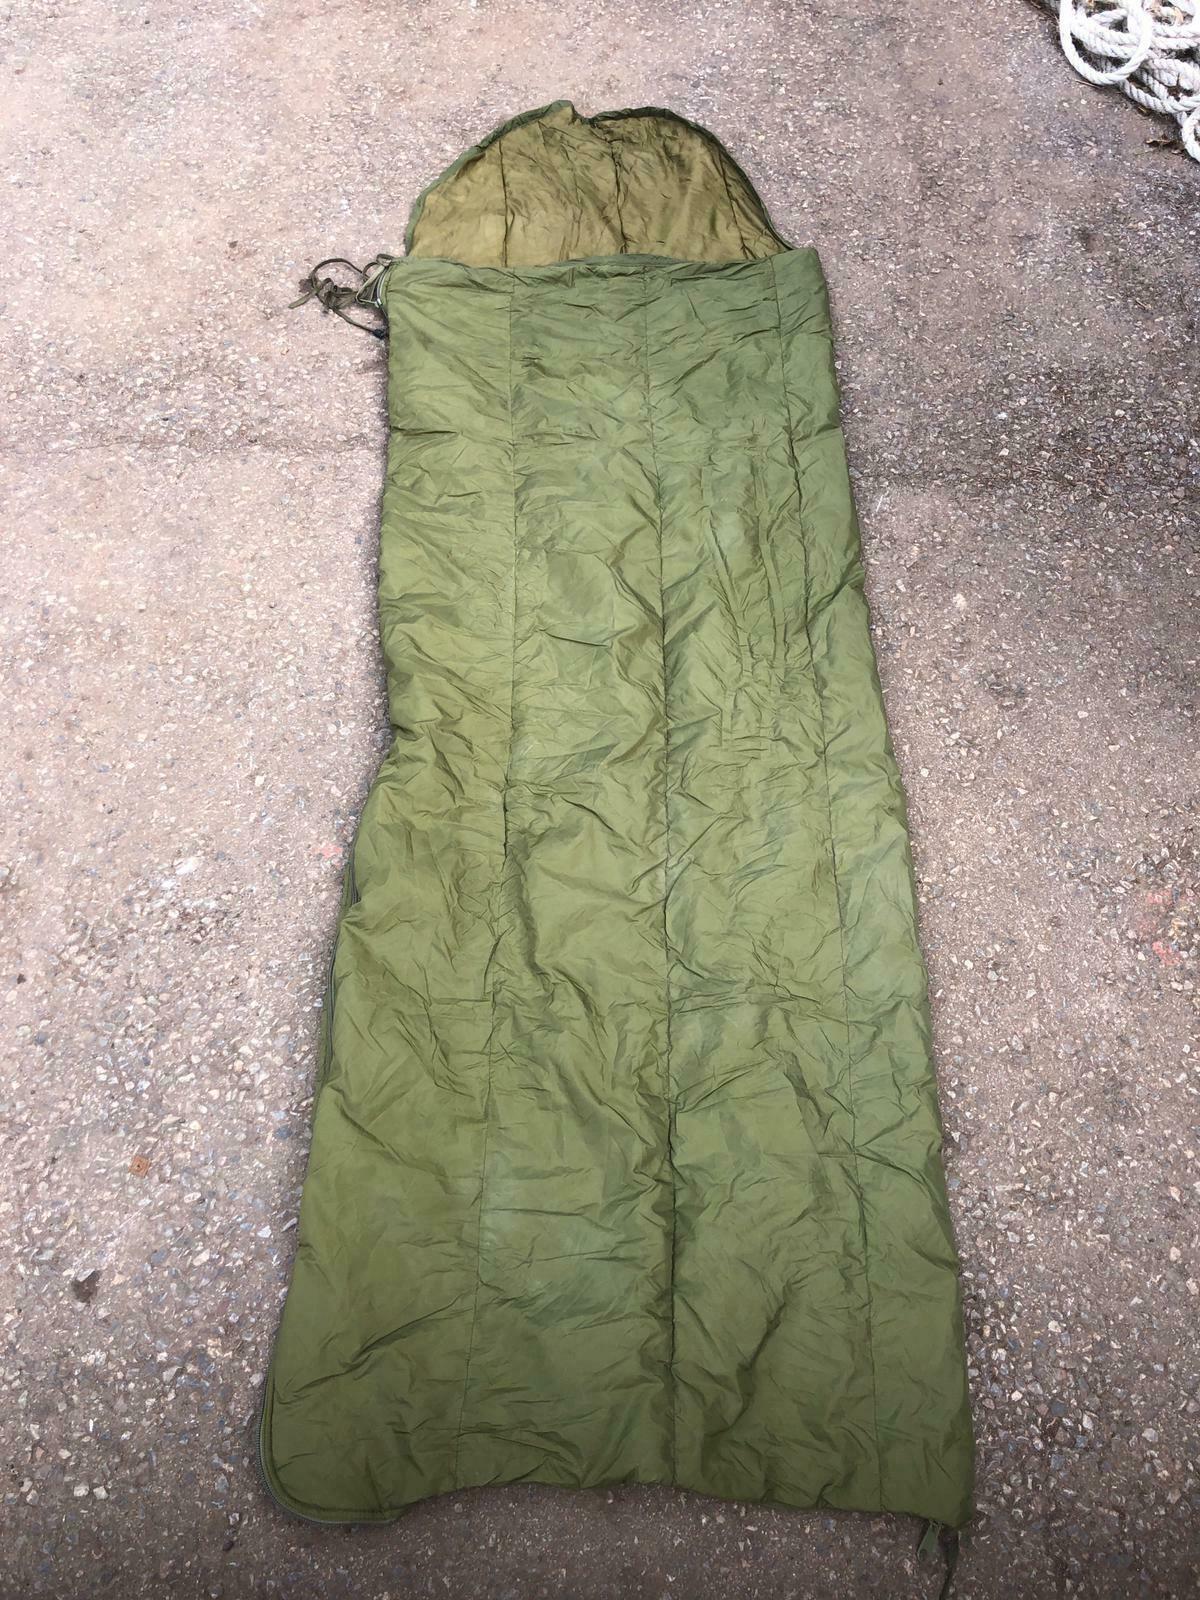 Genuine Grade 1 British Army Jungle Sleeping Bag Camping + Stuff Sack ...